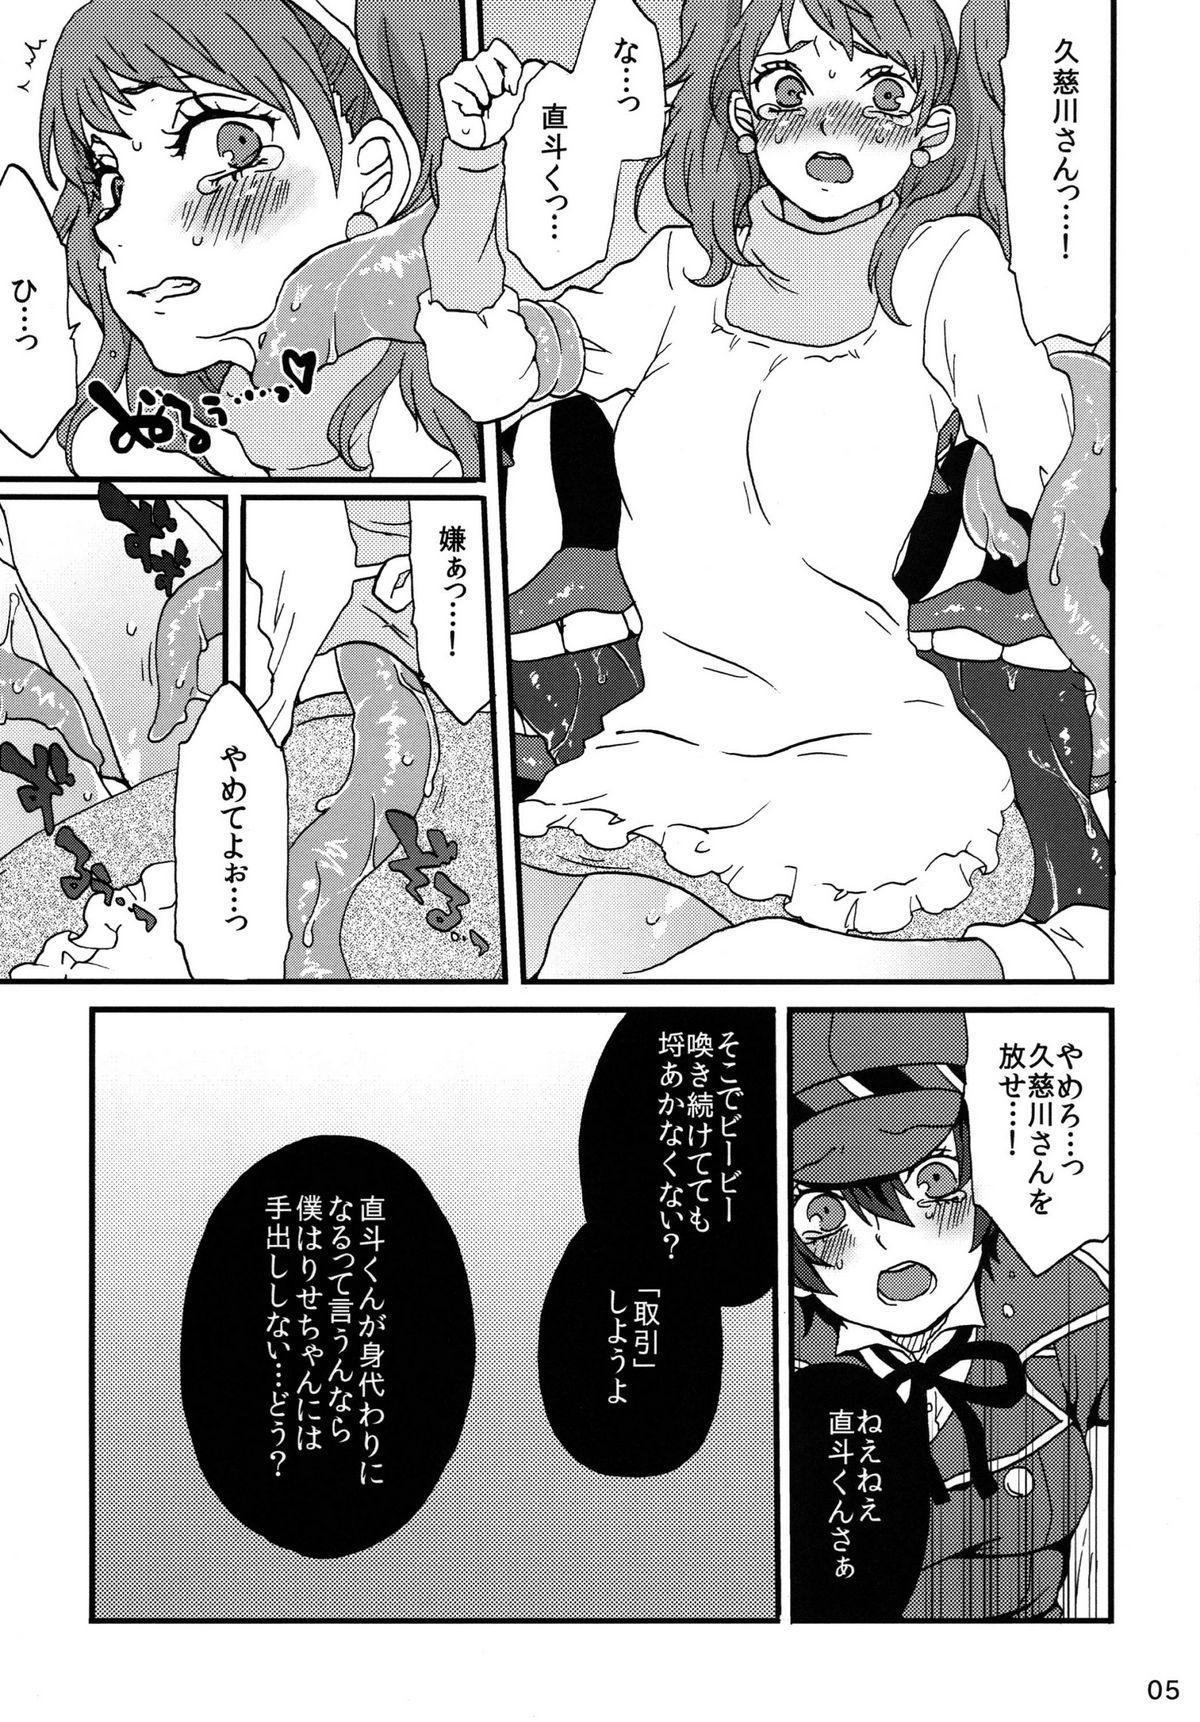 Fat Koukishin ha Neko wo Korosu - Persona 4 Cameltoe - Page 5